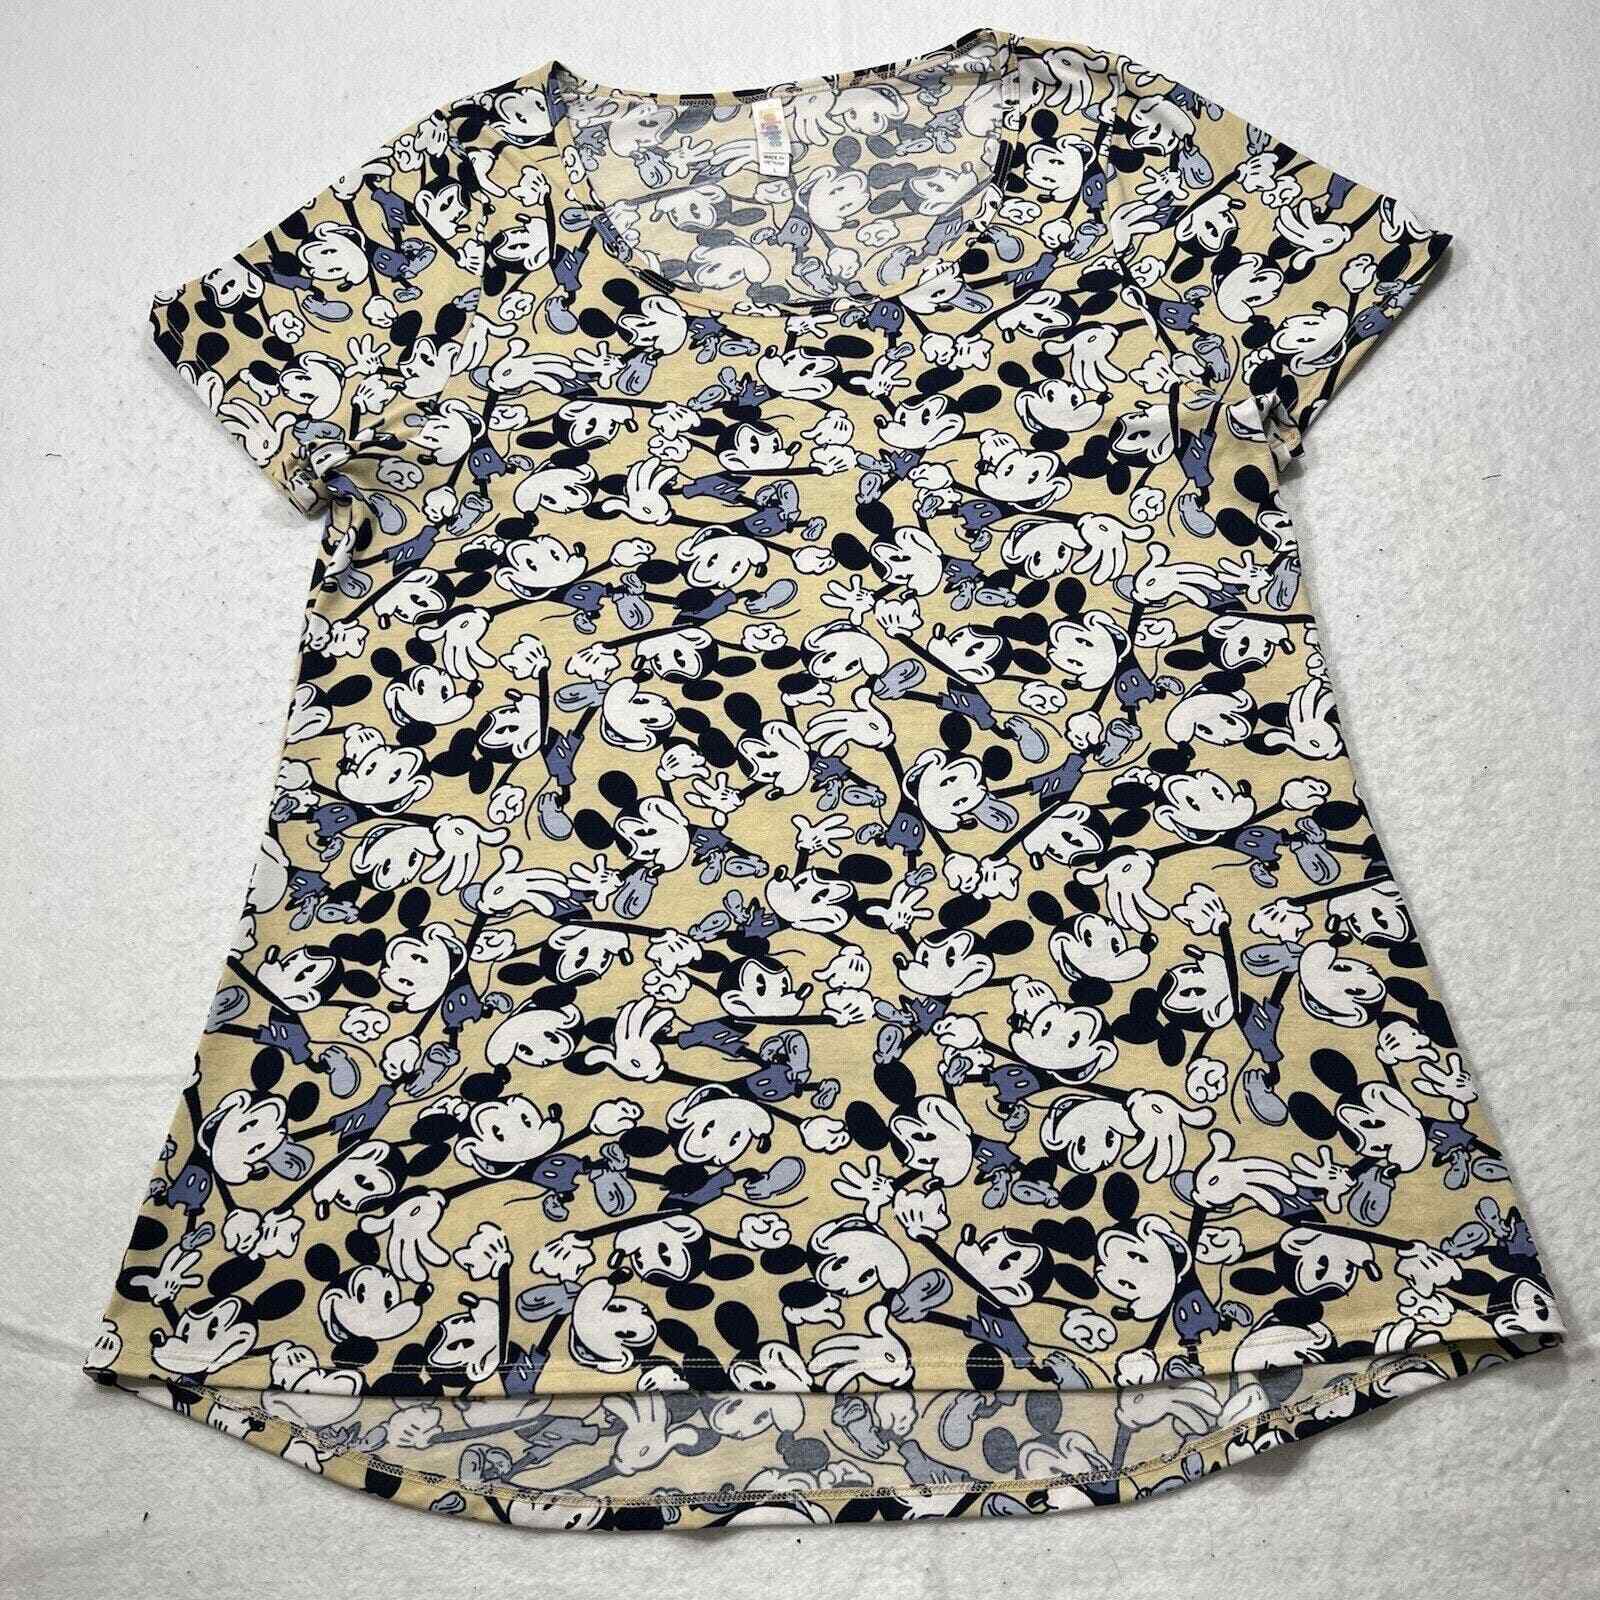 LuLaRoe x Disney Women's Large Short Sleeve Mickey Mouse Patterned T Shirt Top